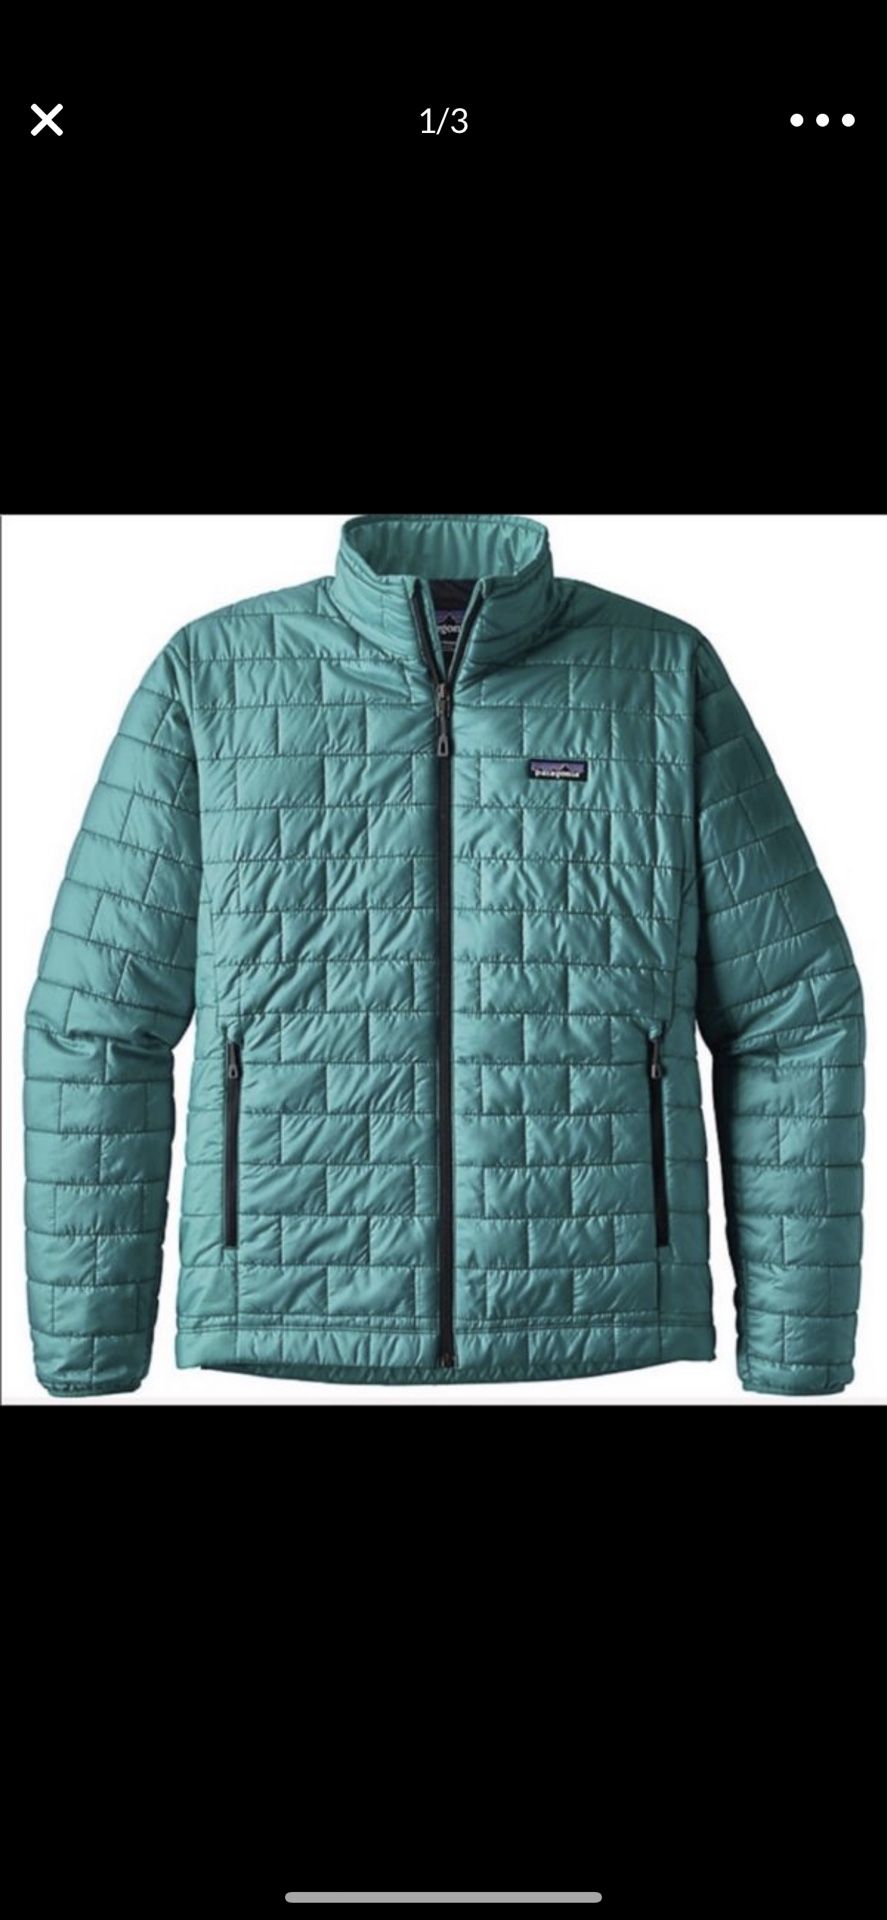 Patagonia teal jacket